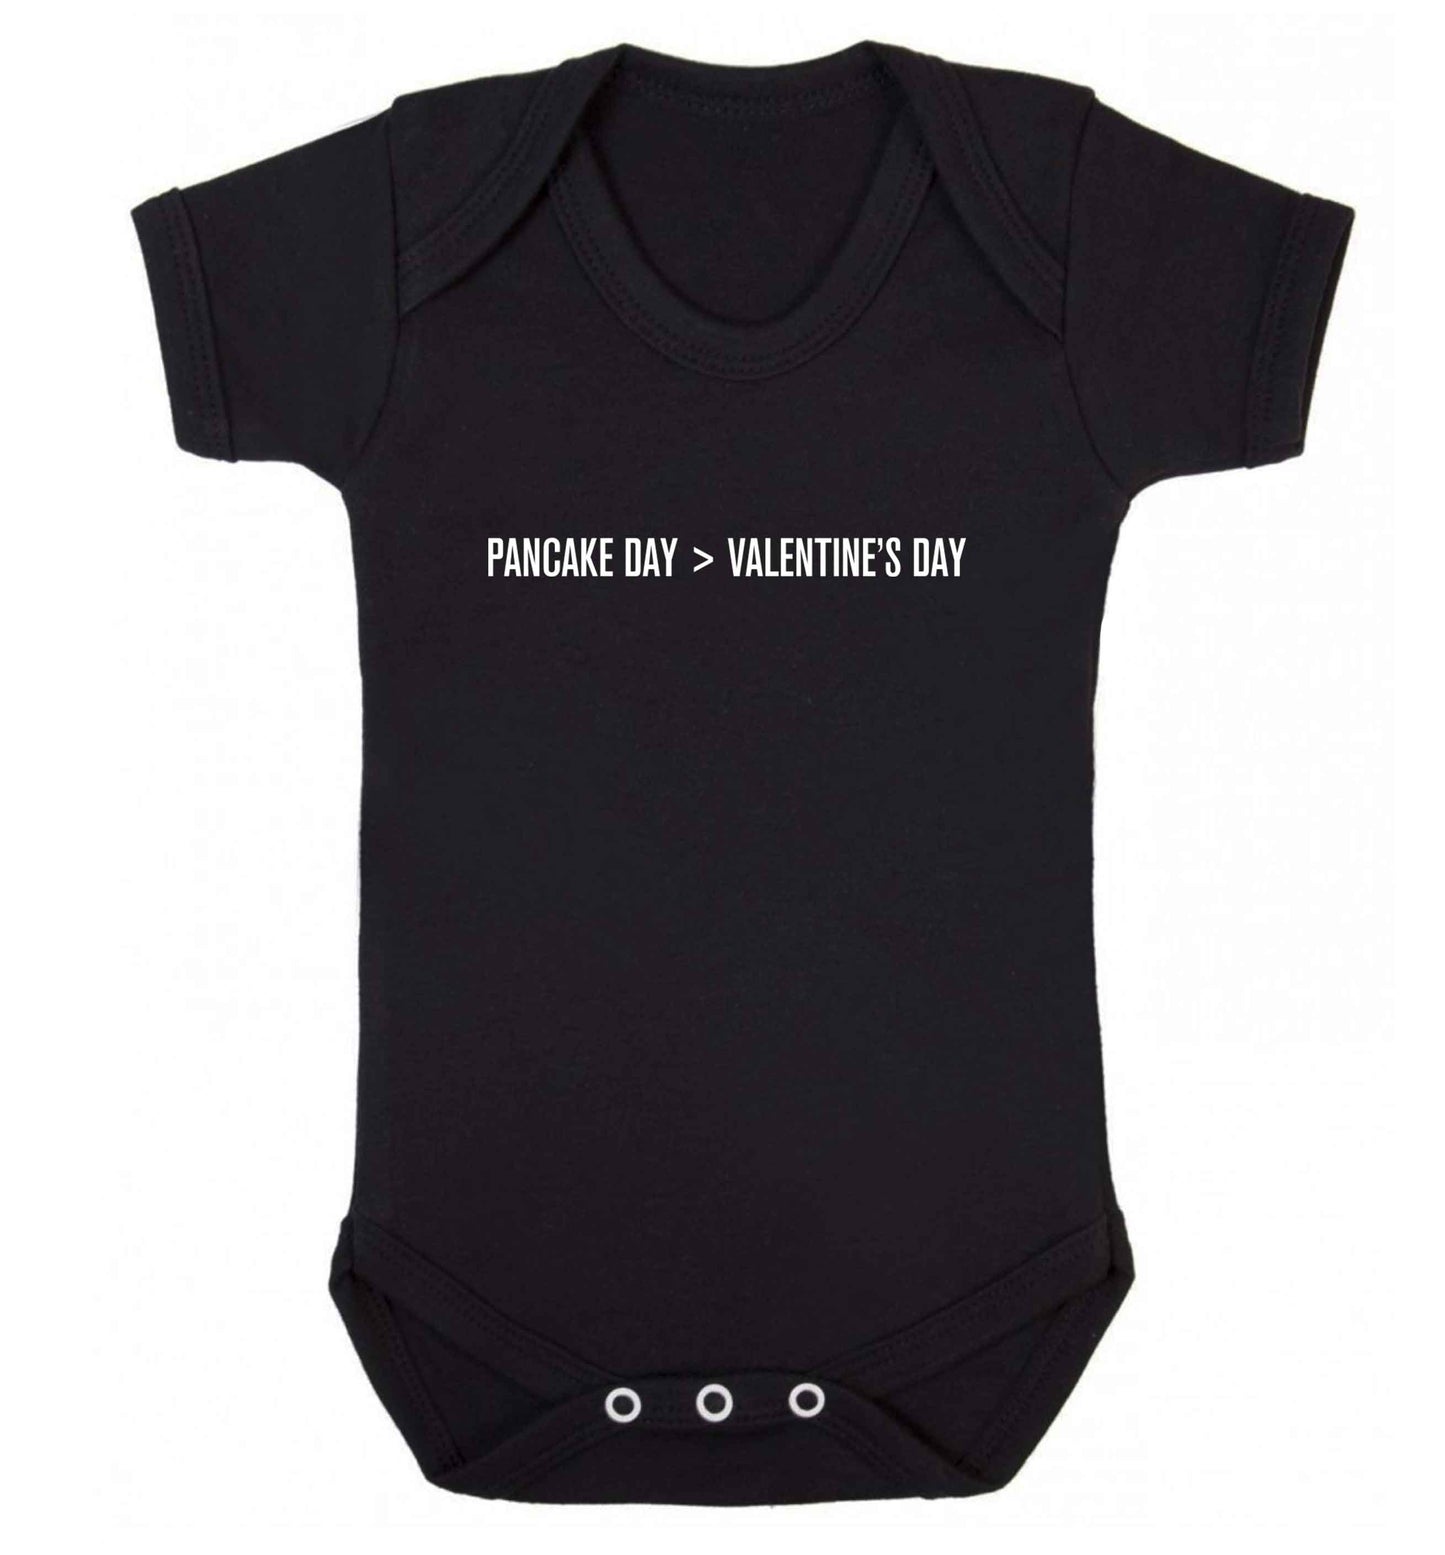 Pancake day > valentines day baby vest black 18-24 months